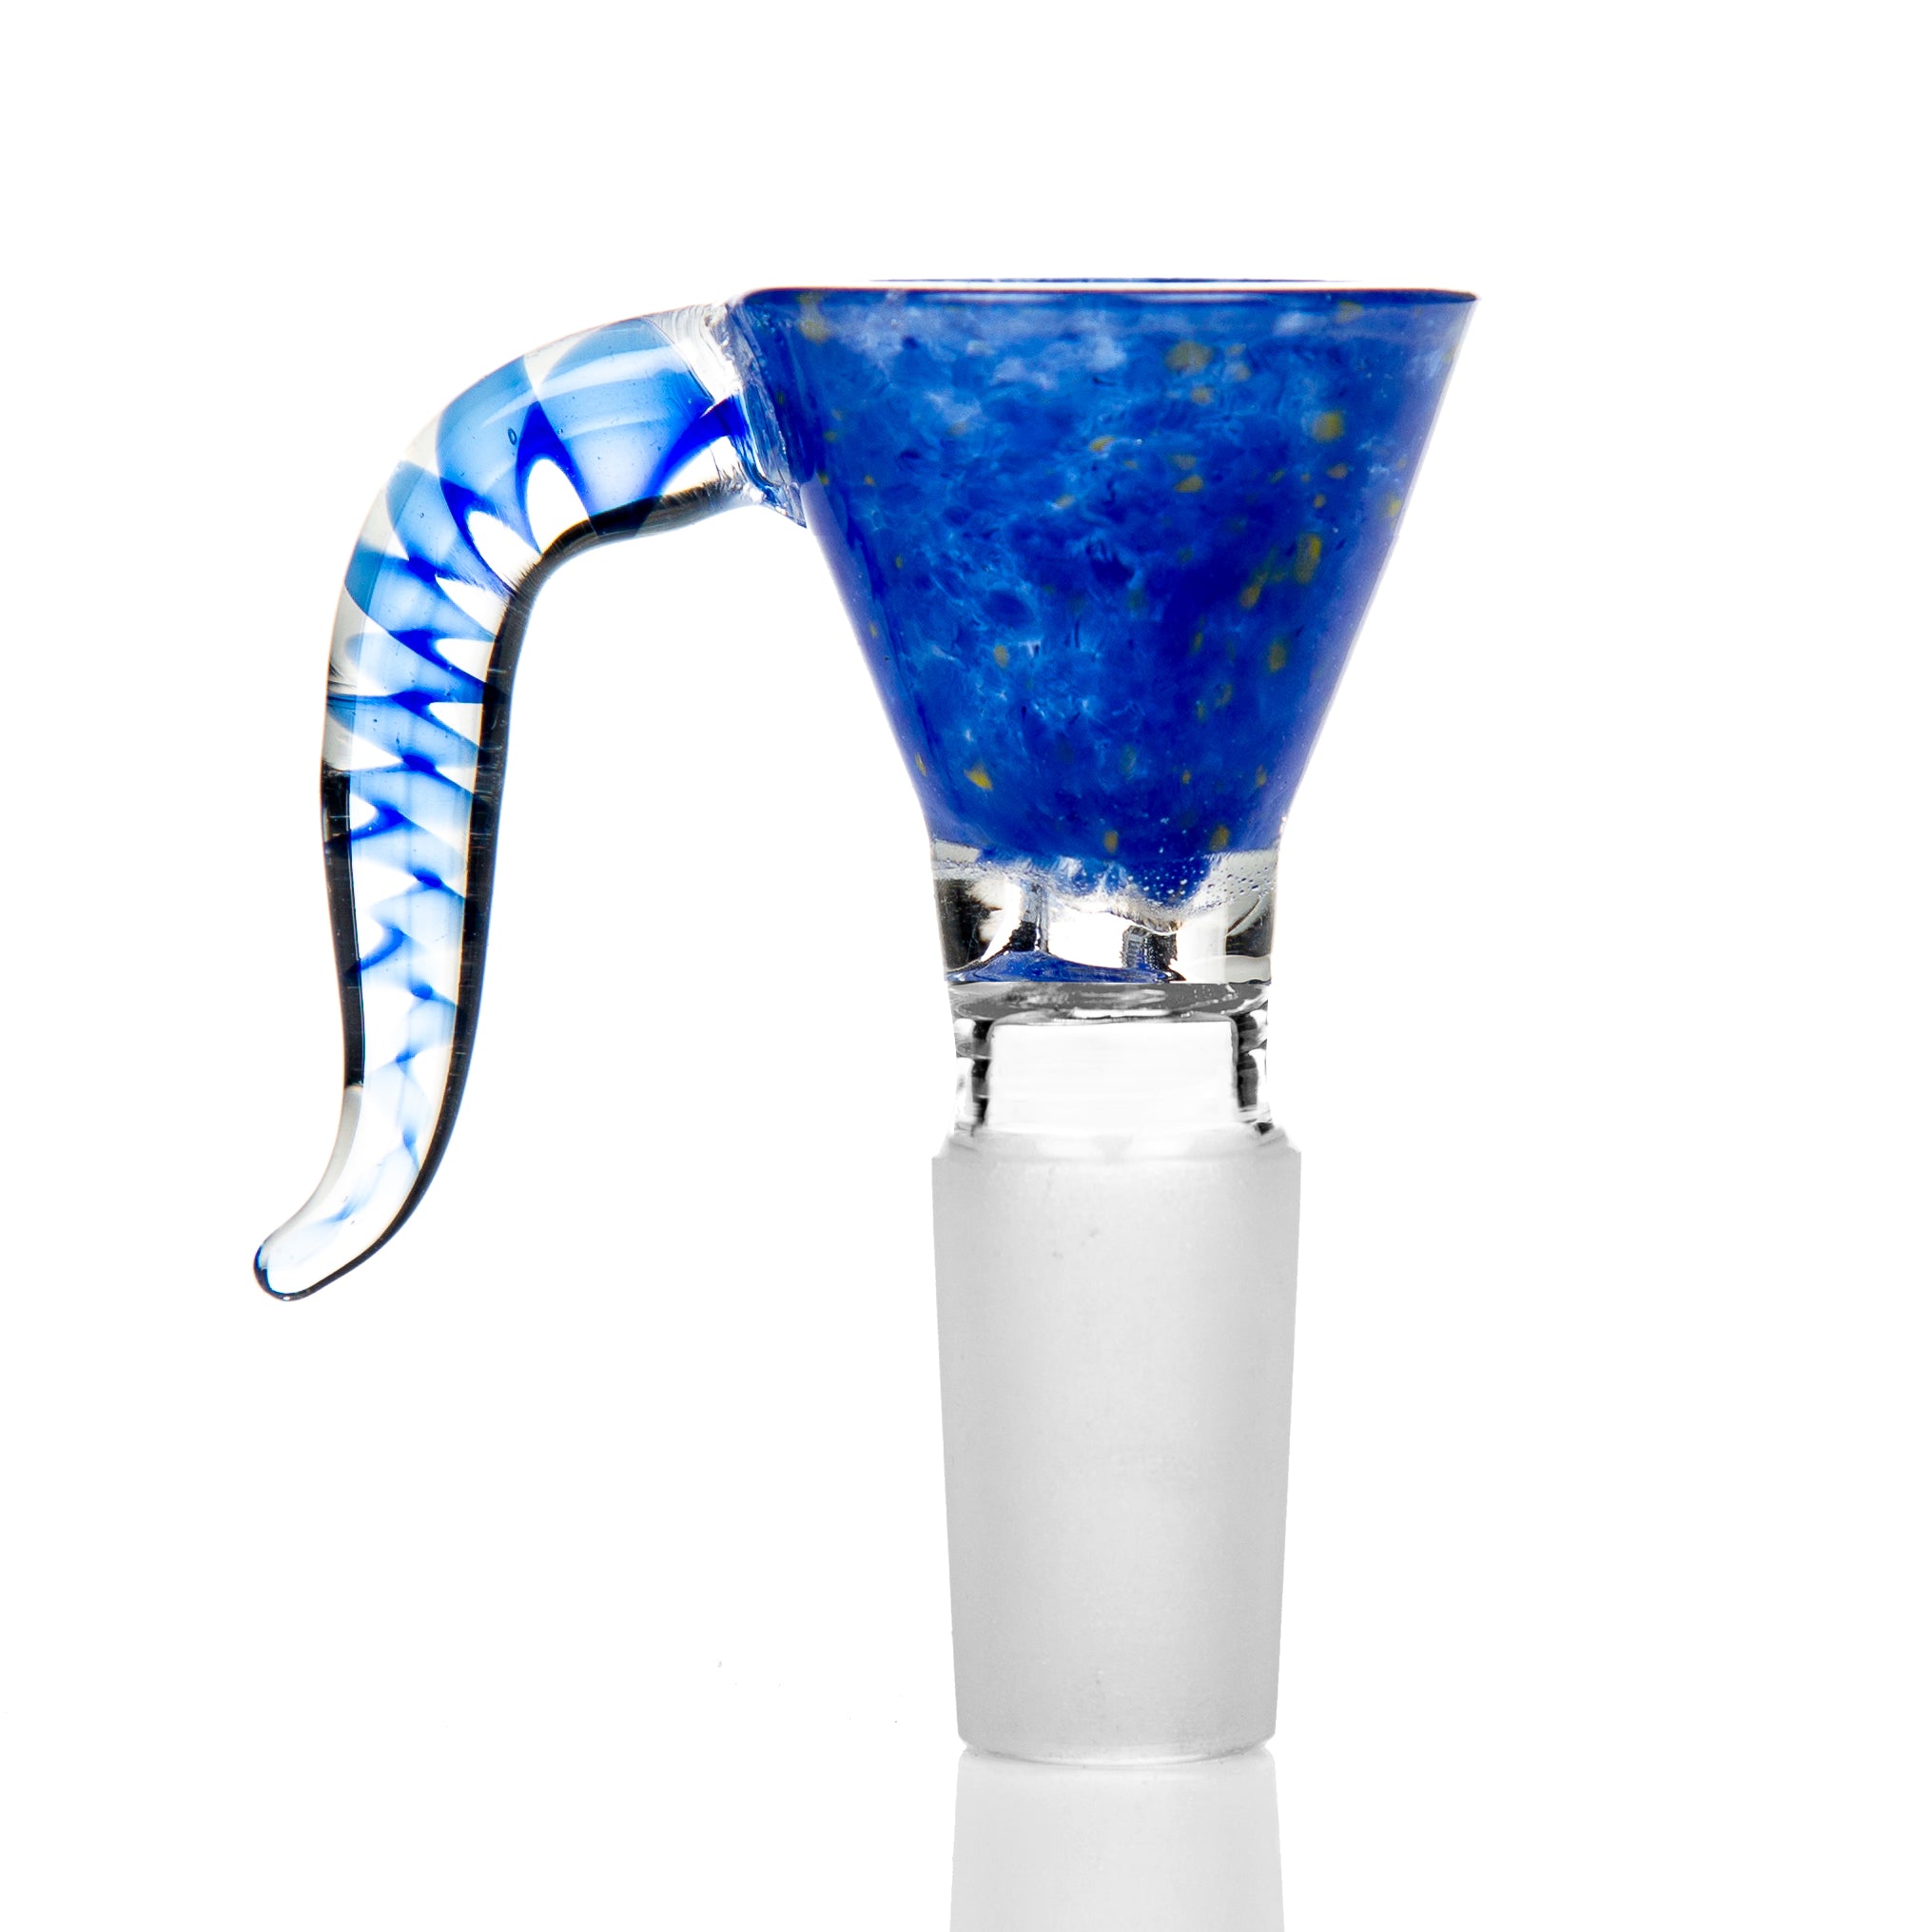 14mm blue cone piece for glass beaker bongs.